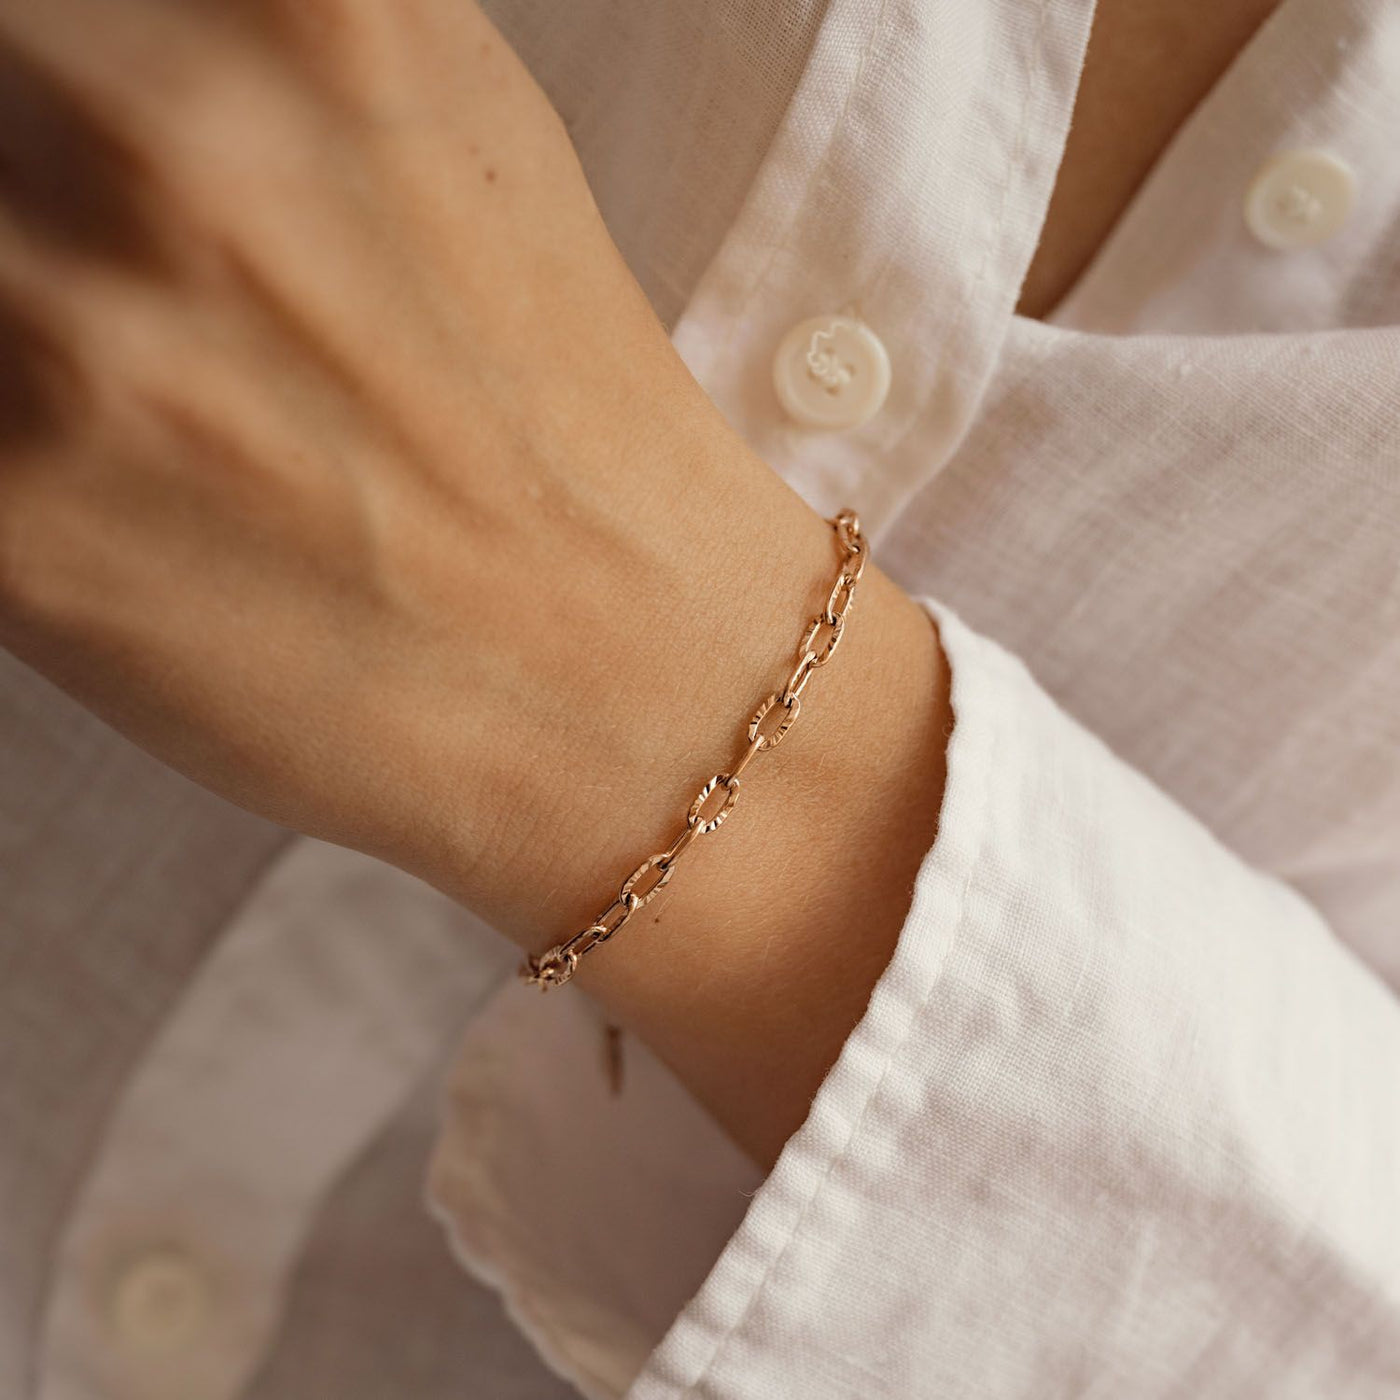 Textured Link Chain Bracelet Rose Gold